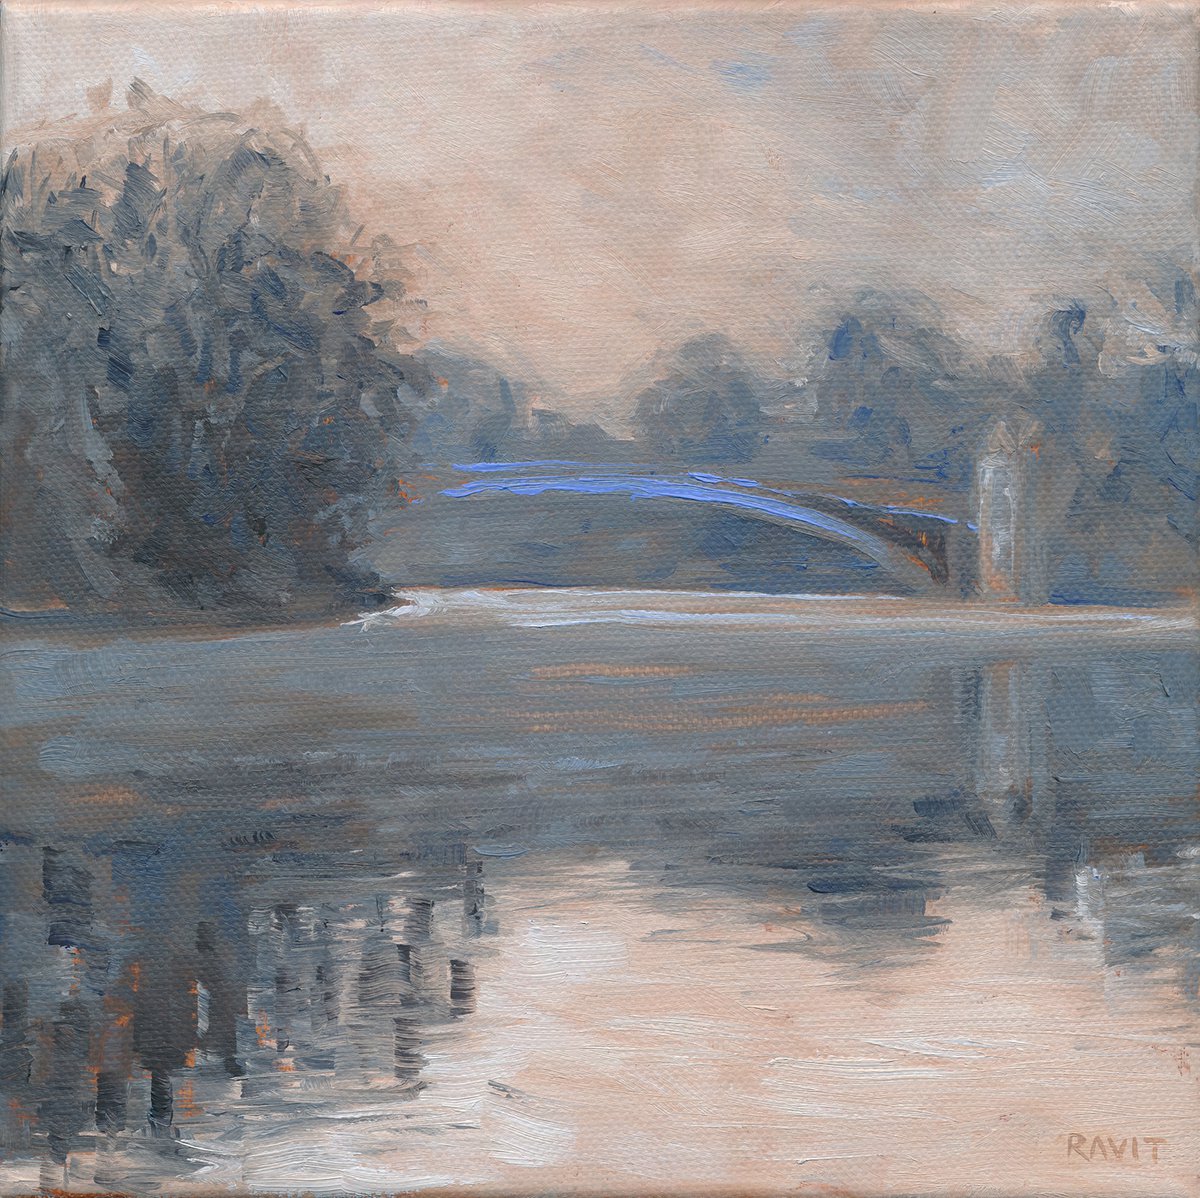 The Bridge Over the River by Frau Einhorn